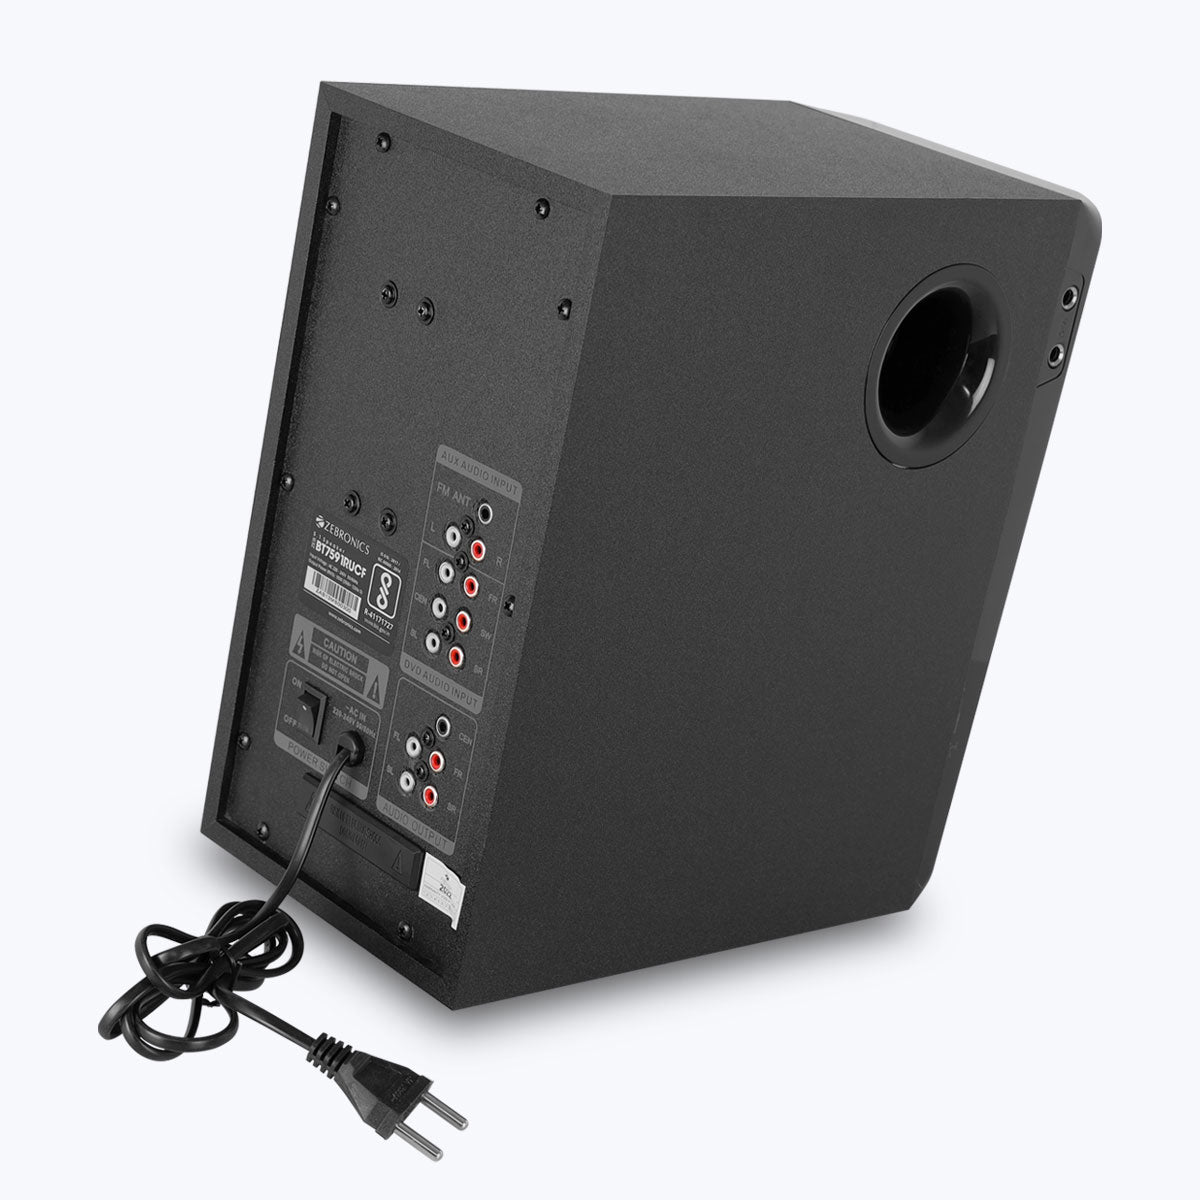 Zeb-BT7591RUCF - 5.1 Speakers - Zebronics